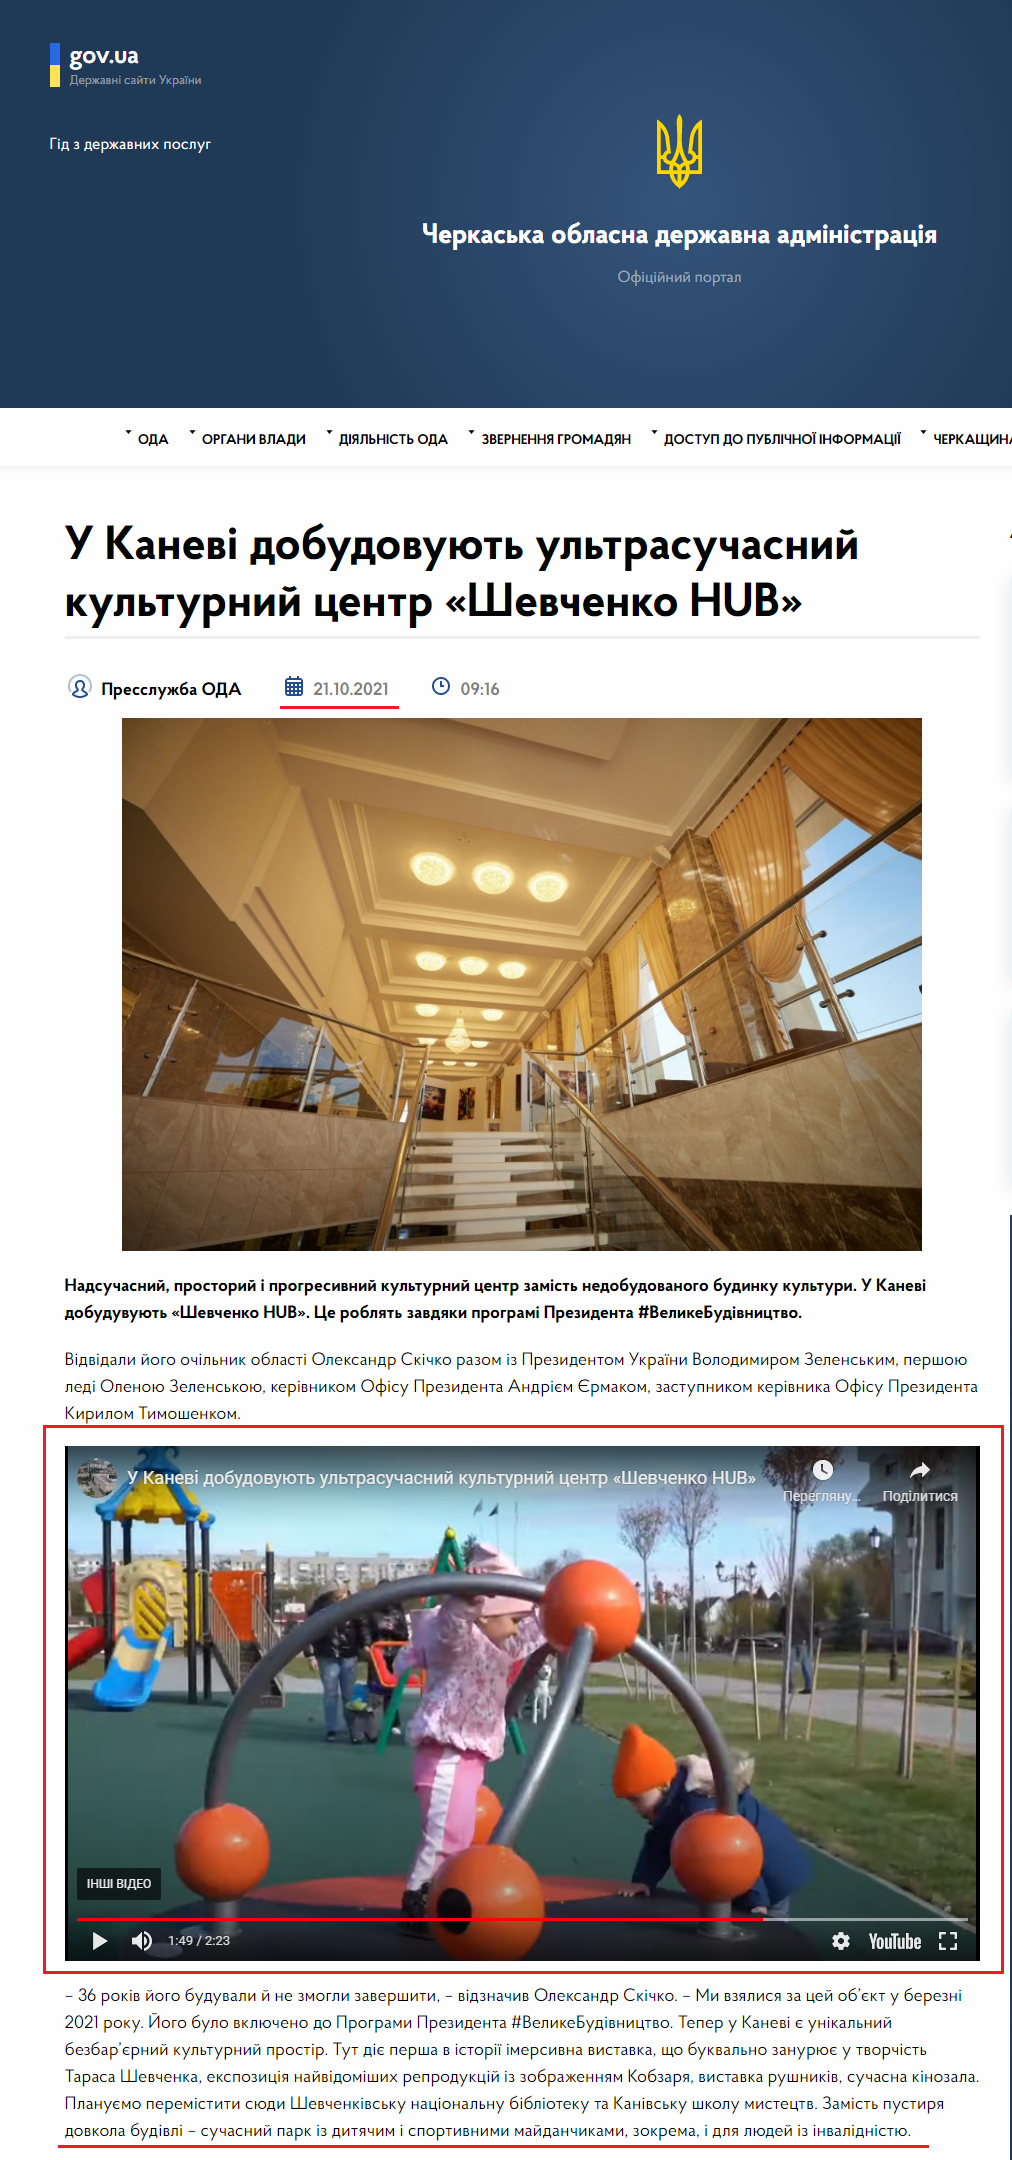 https://ck-oda.gov.ua/velikebudivnictvo/u-kanevi-dobudovuyut-ultrasuchasnij-kulturnij-centr-shevchenko-hub/